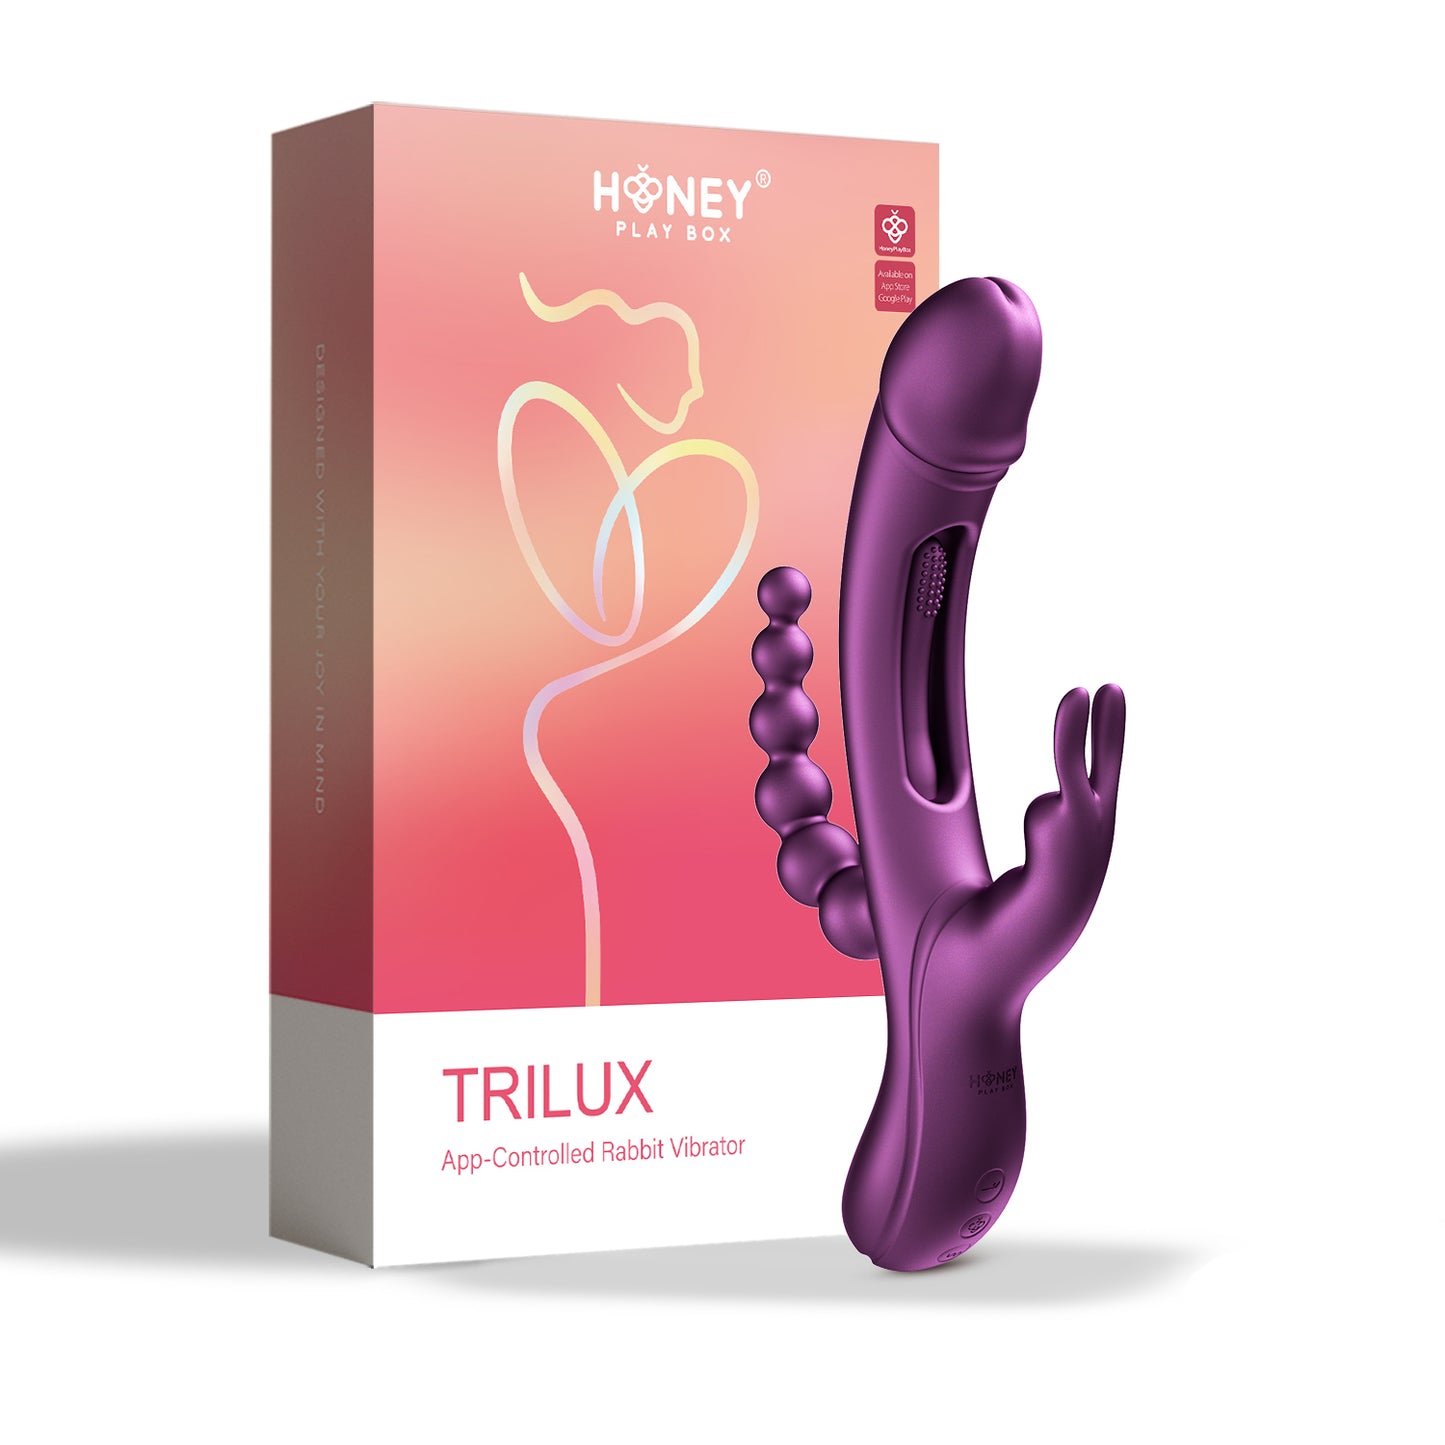 Trilux - App Controlled Rabbit Vibrator